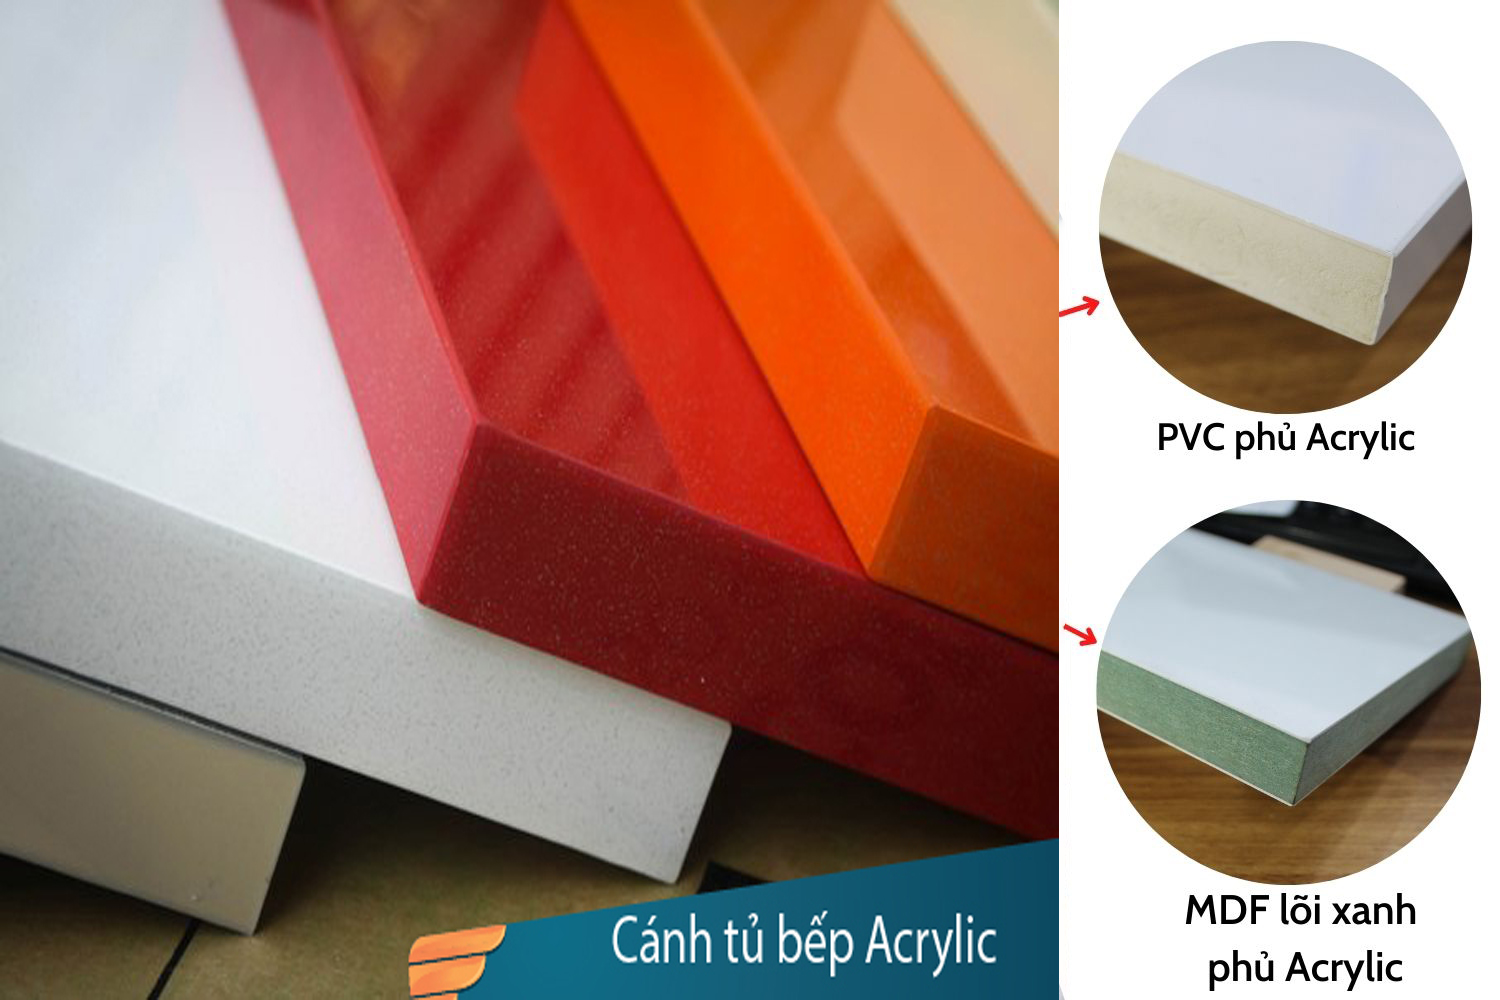 acrylic phủ trên code nhựa PVC hoặc code gỗ mdf lõi xanh